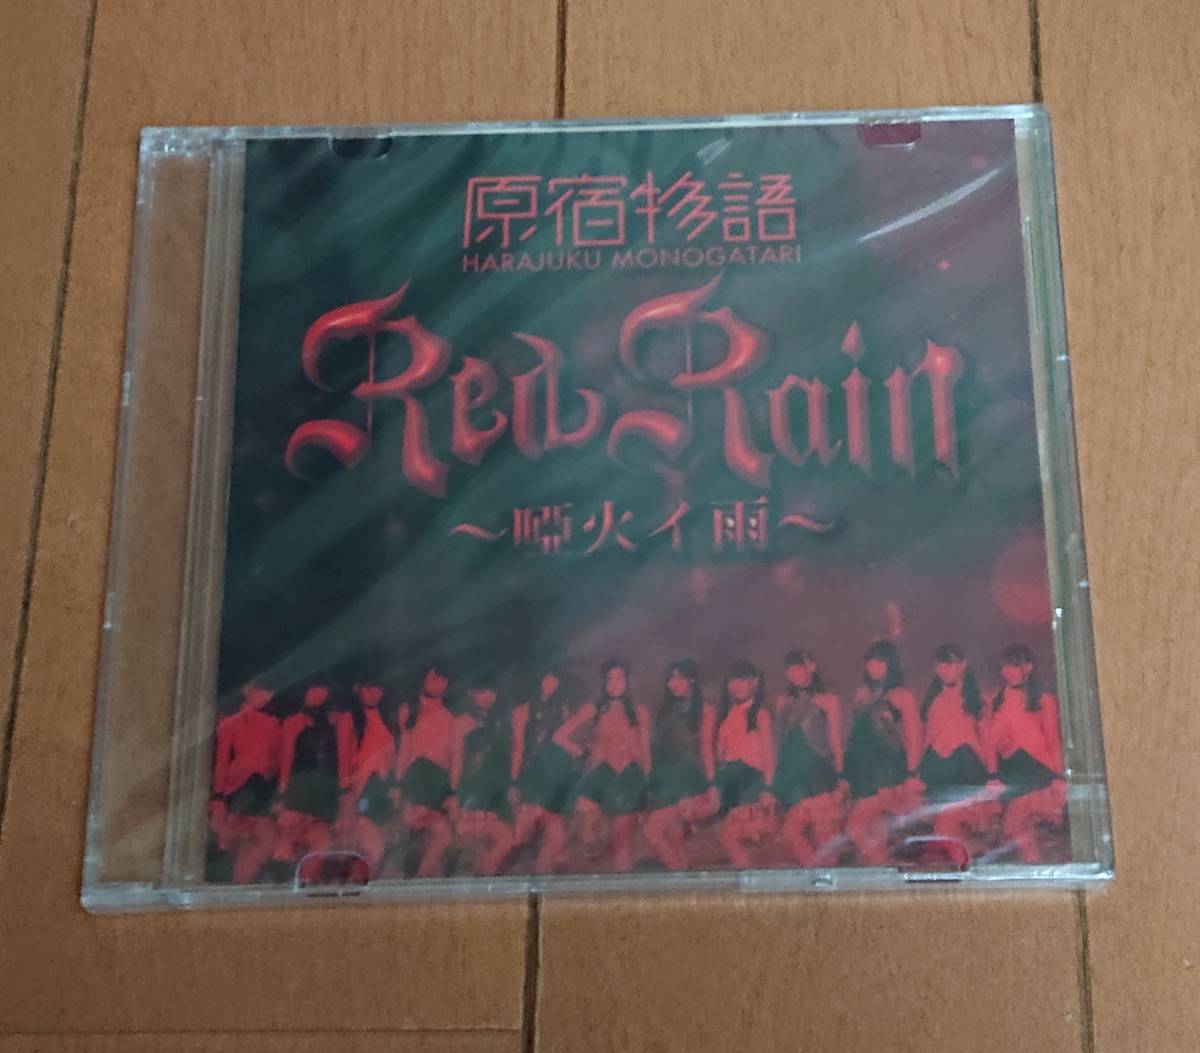 monogatari CD「Red Rain」新品未開封 原宿物語 柊宇咲 ババババンビ_画像1